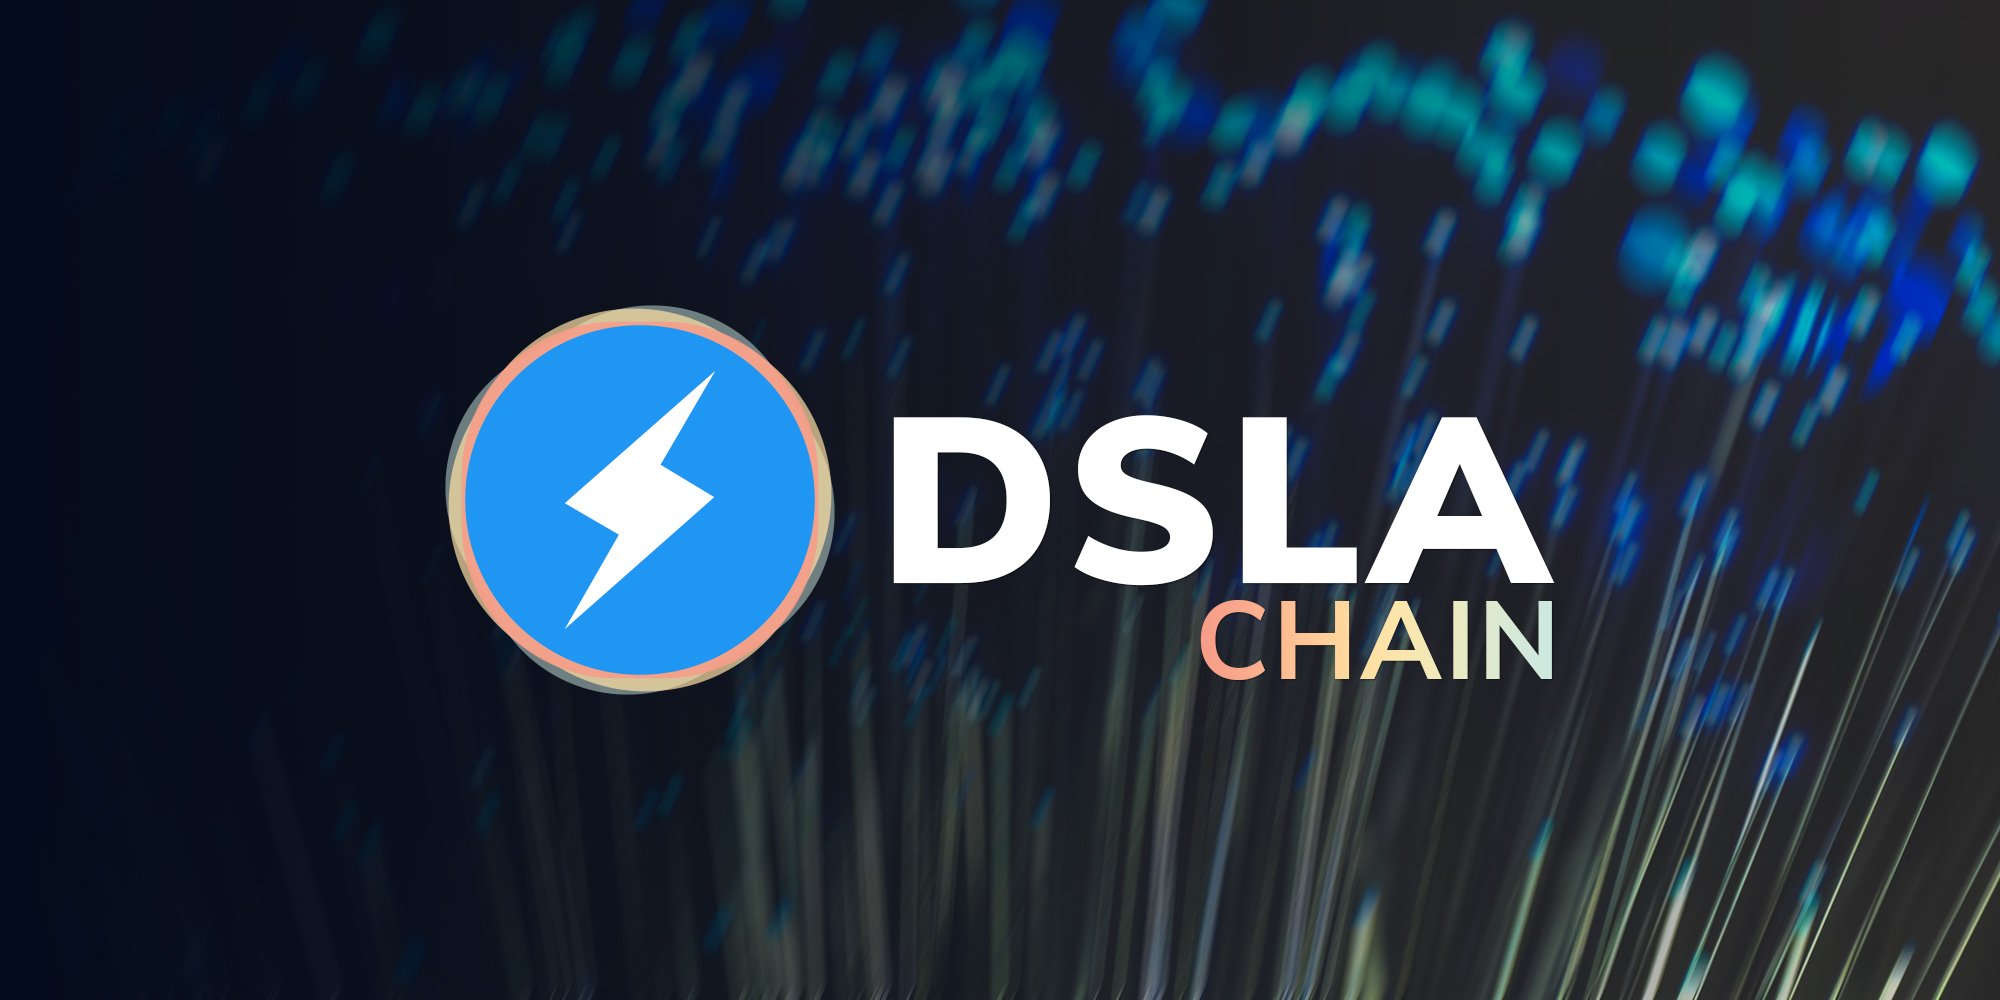 DSLA Protocol announces DSLA Chain, its own blockchain network